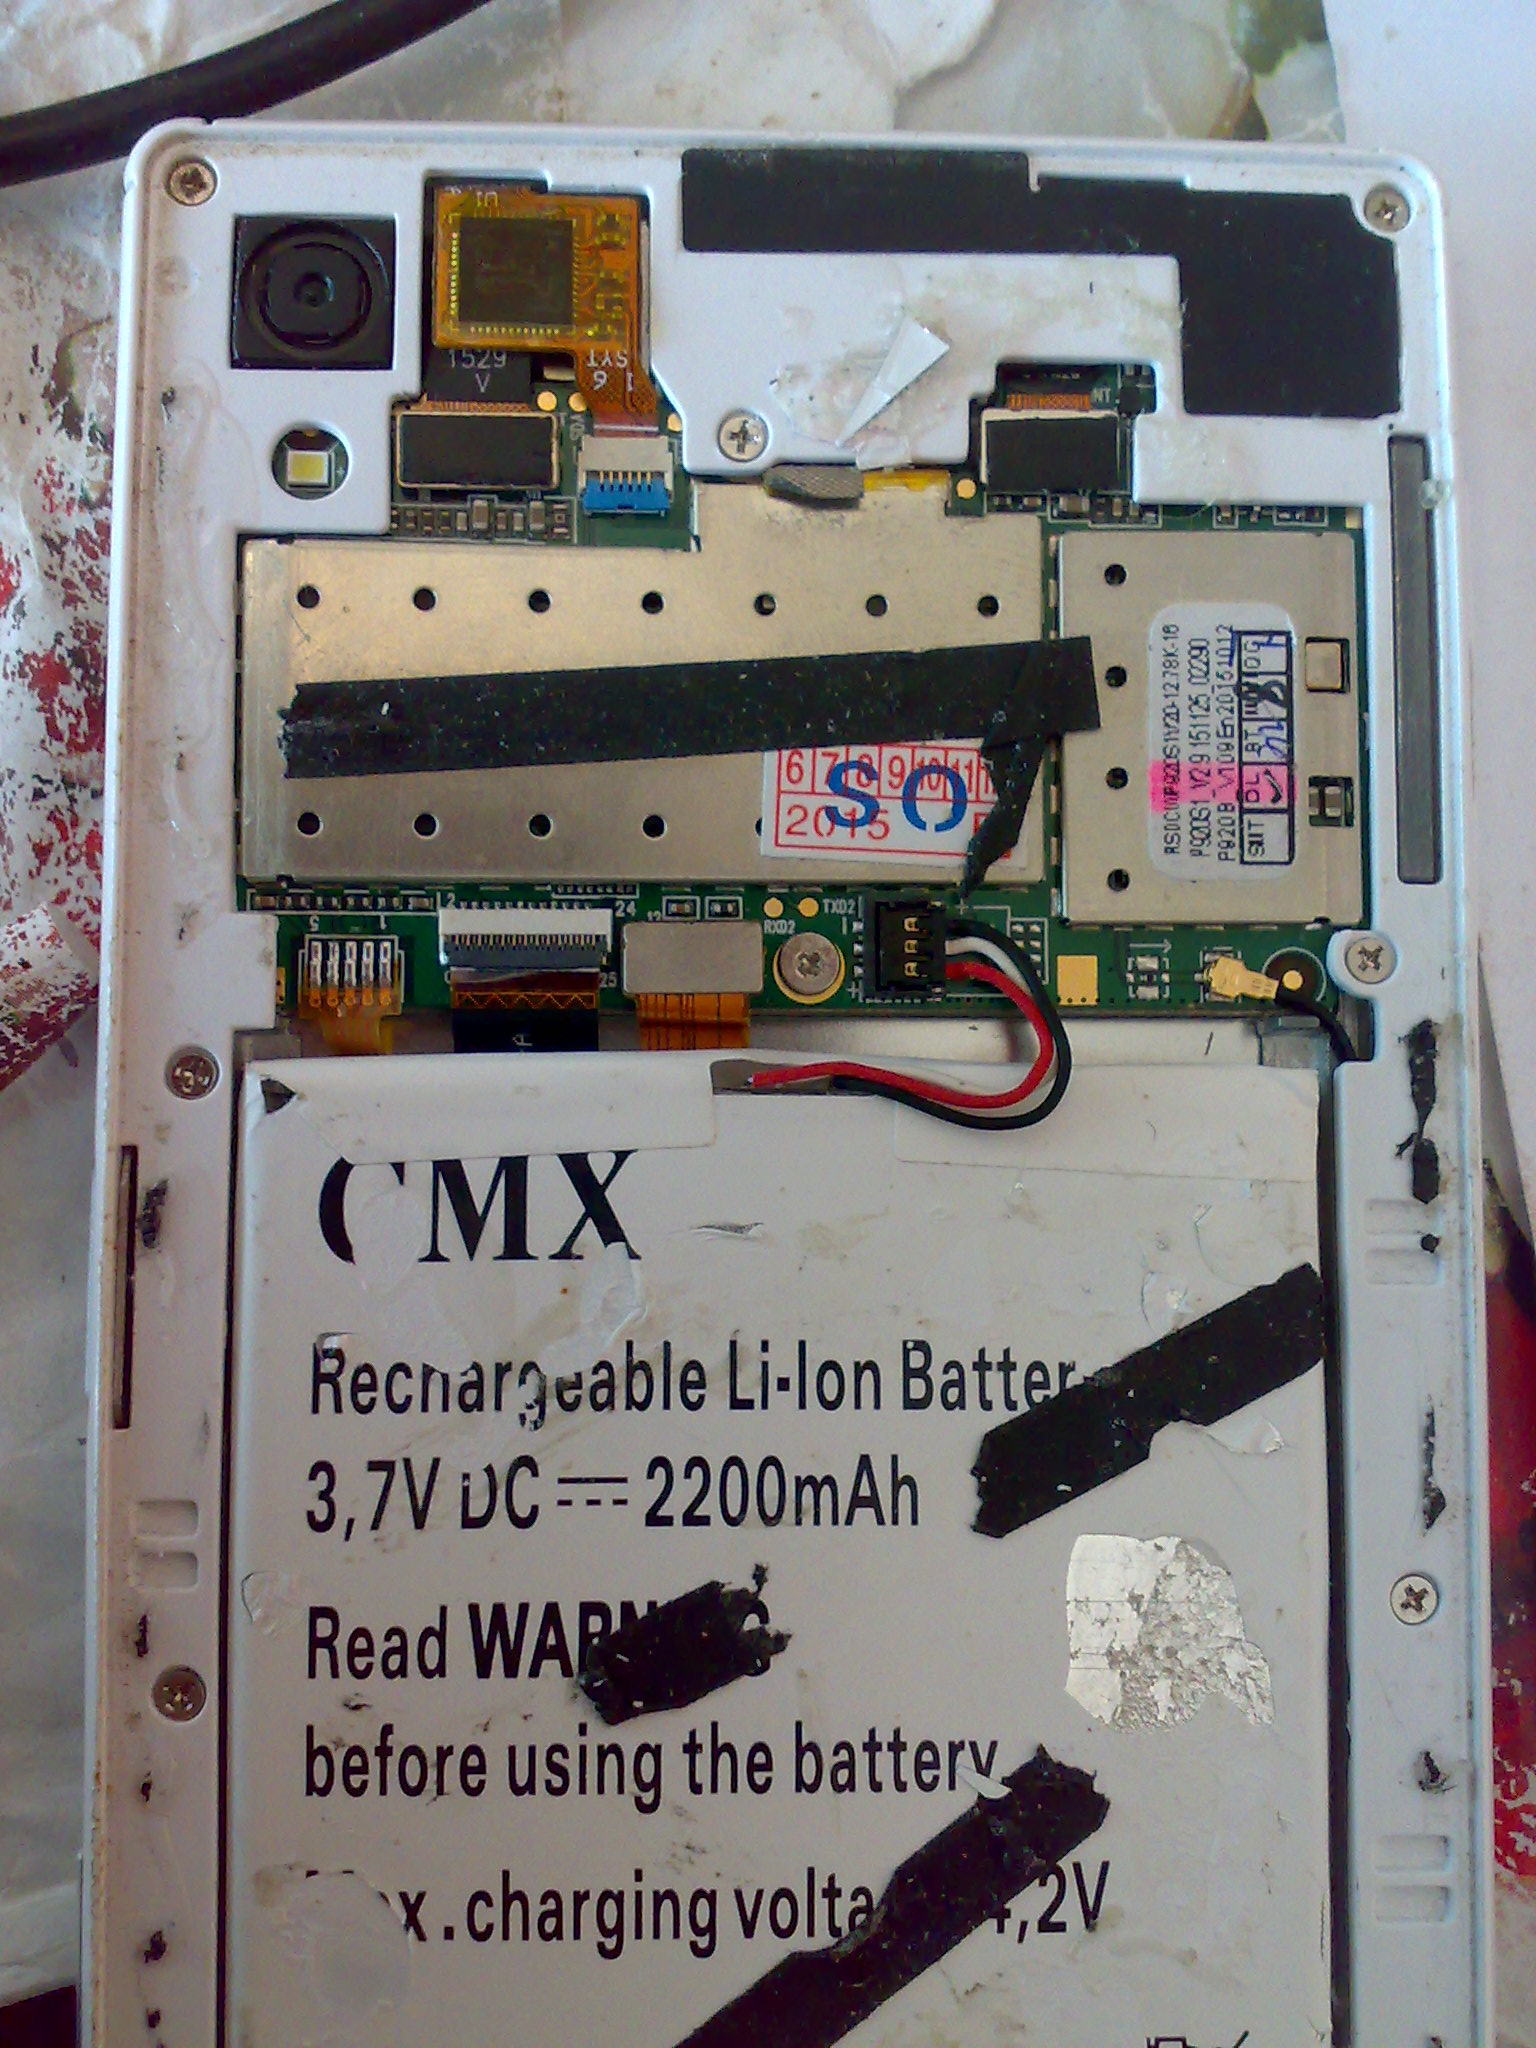   CMX MT6572